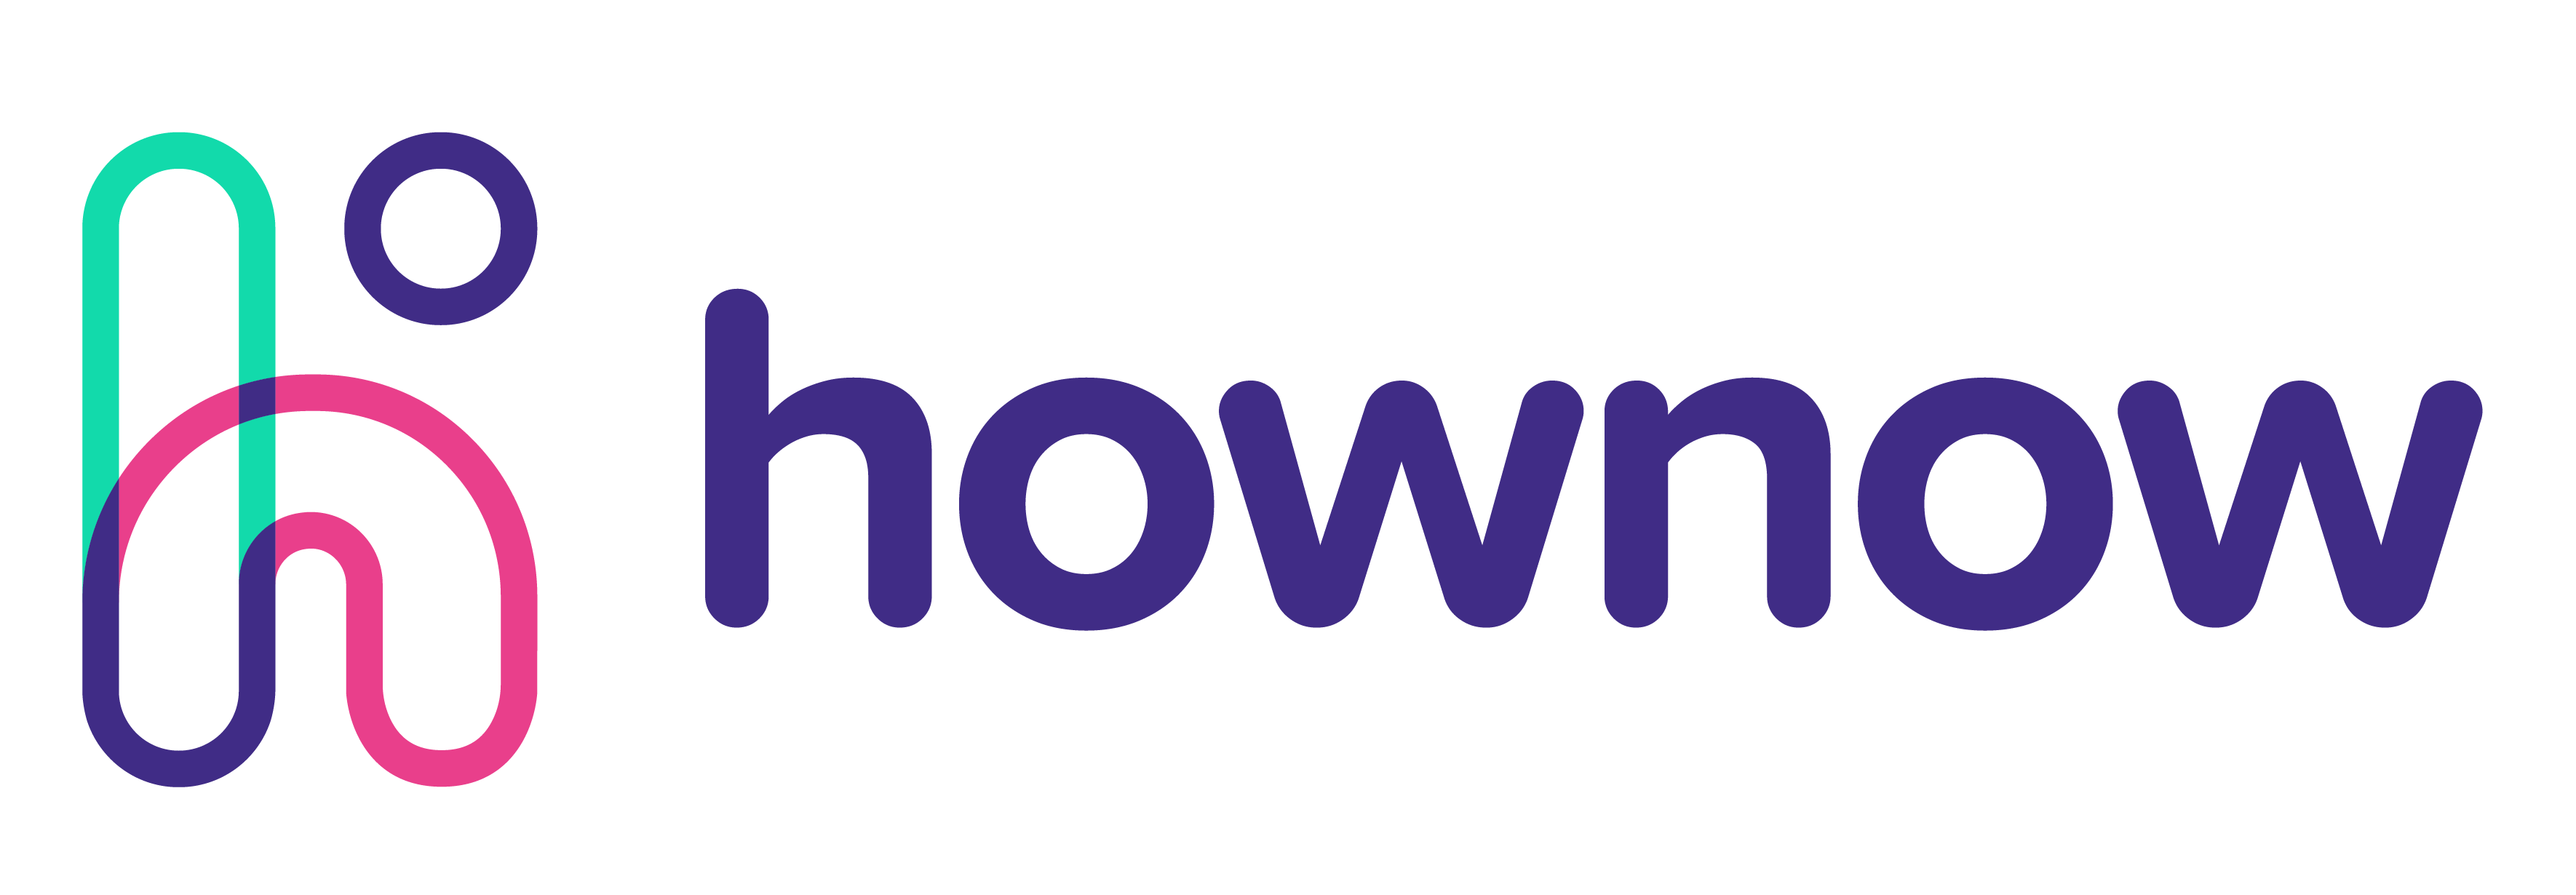 how now logo